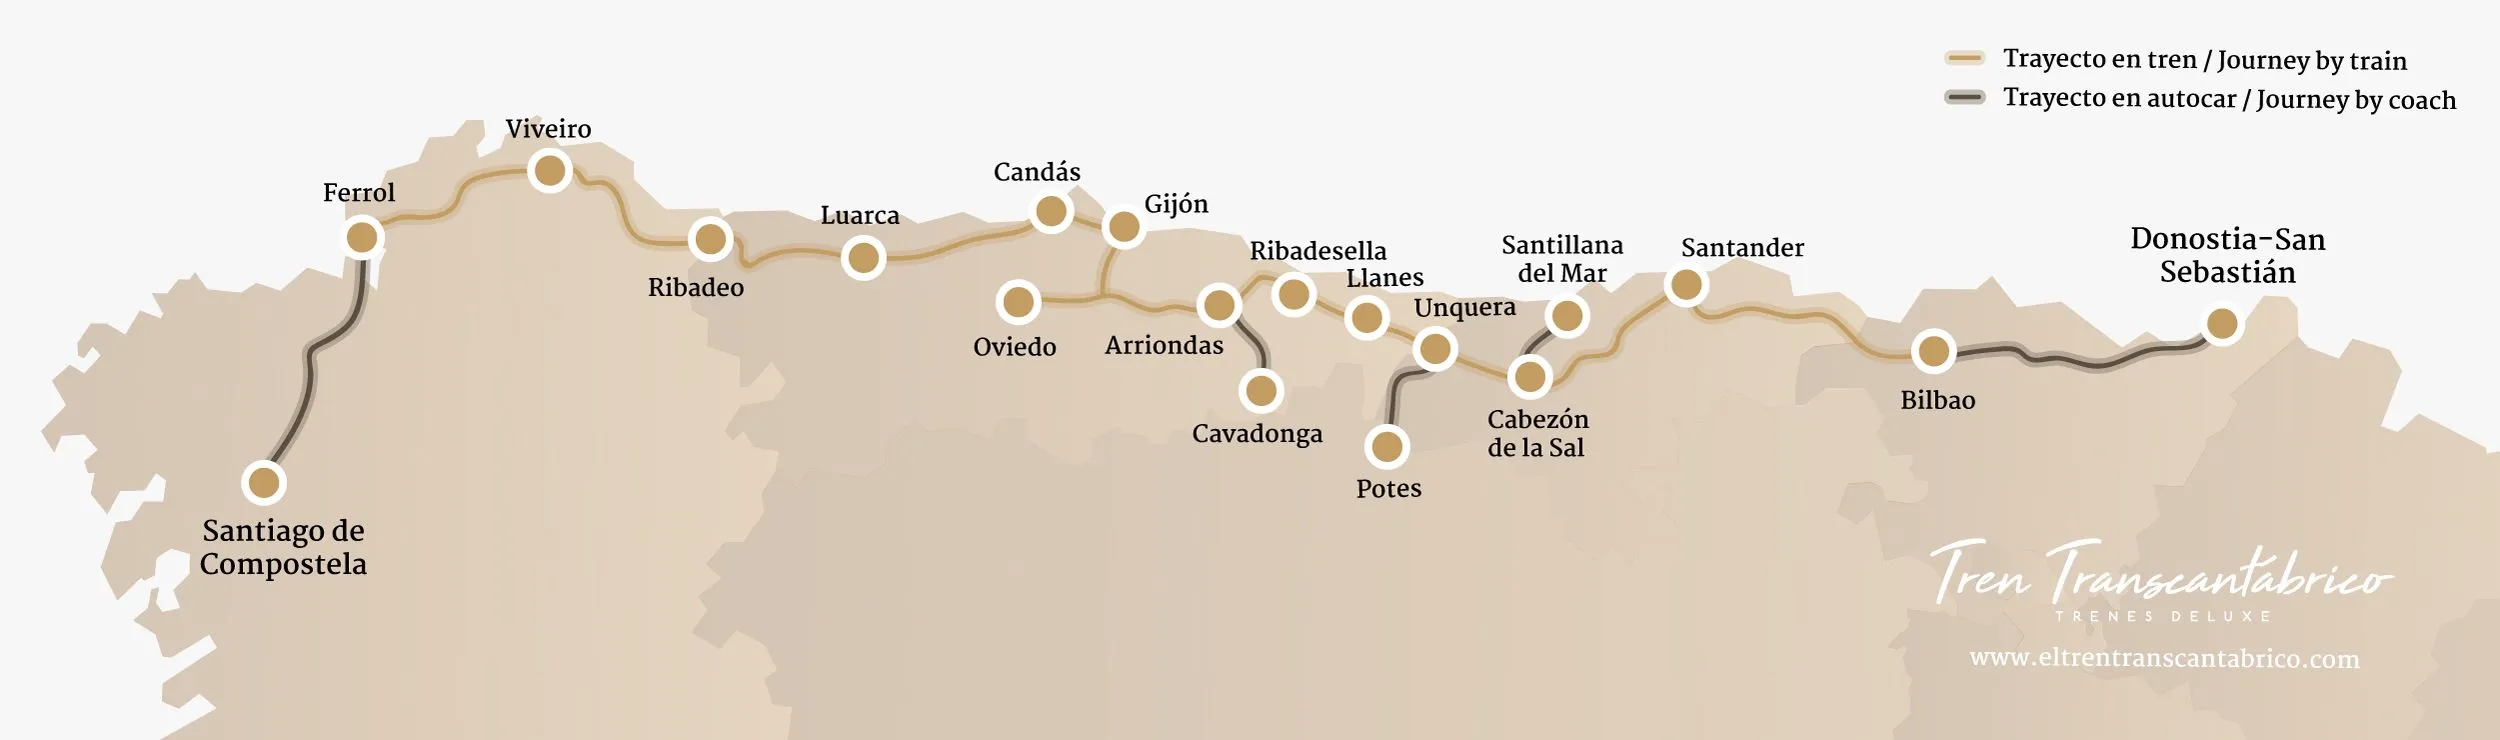 Transcantabrico Map